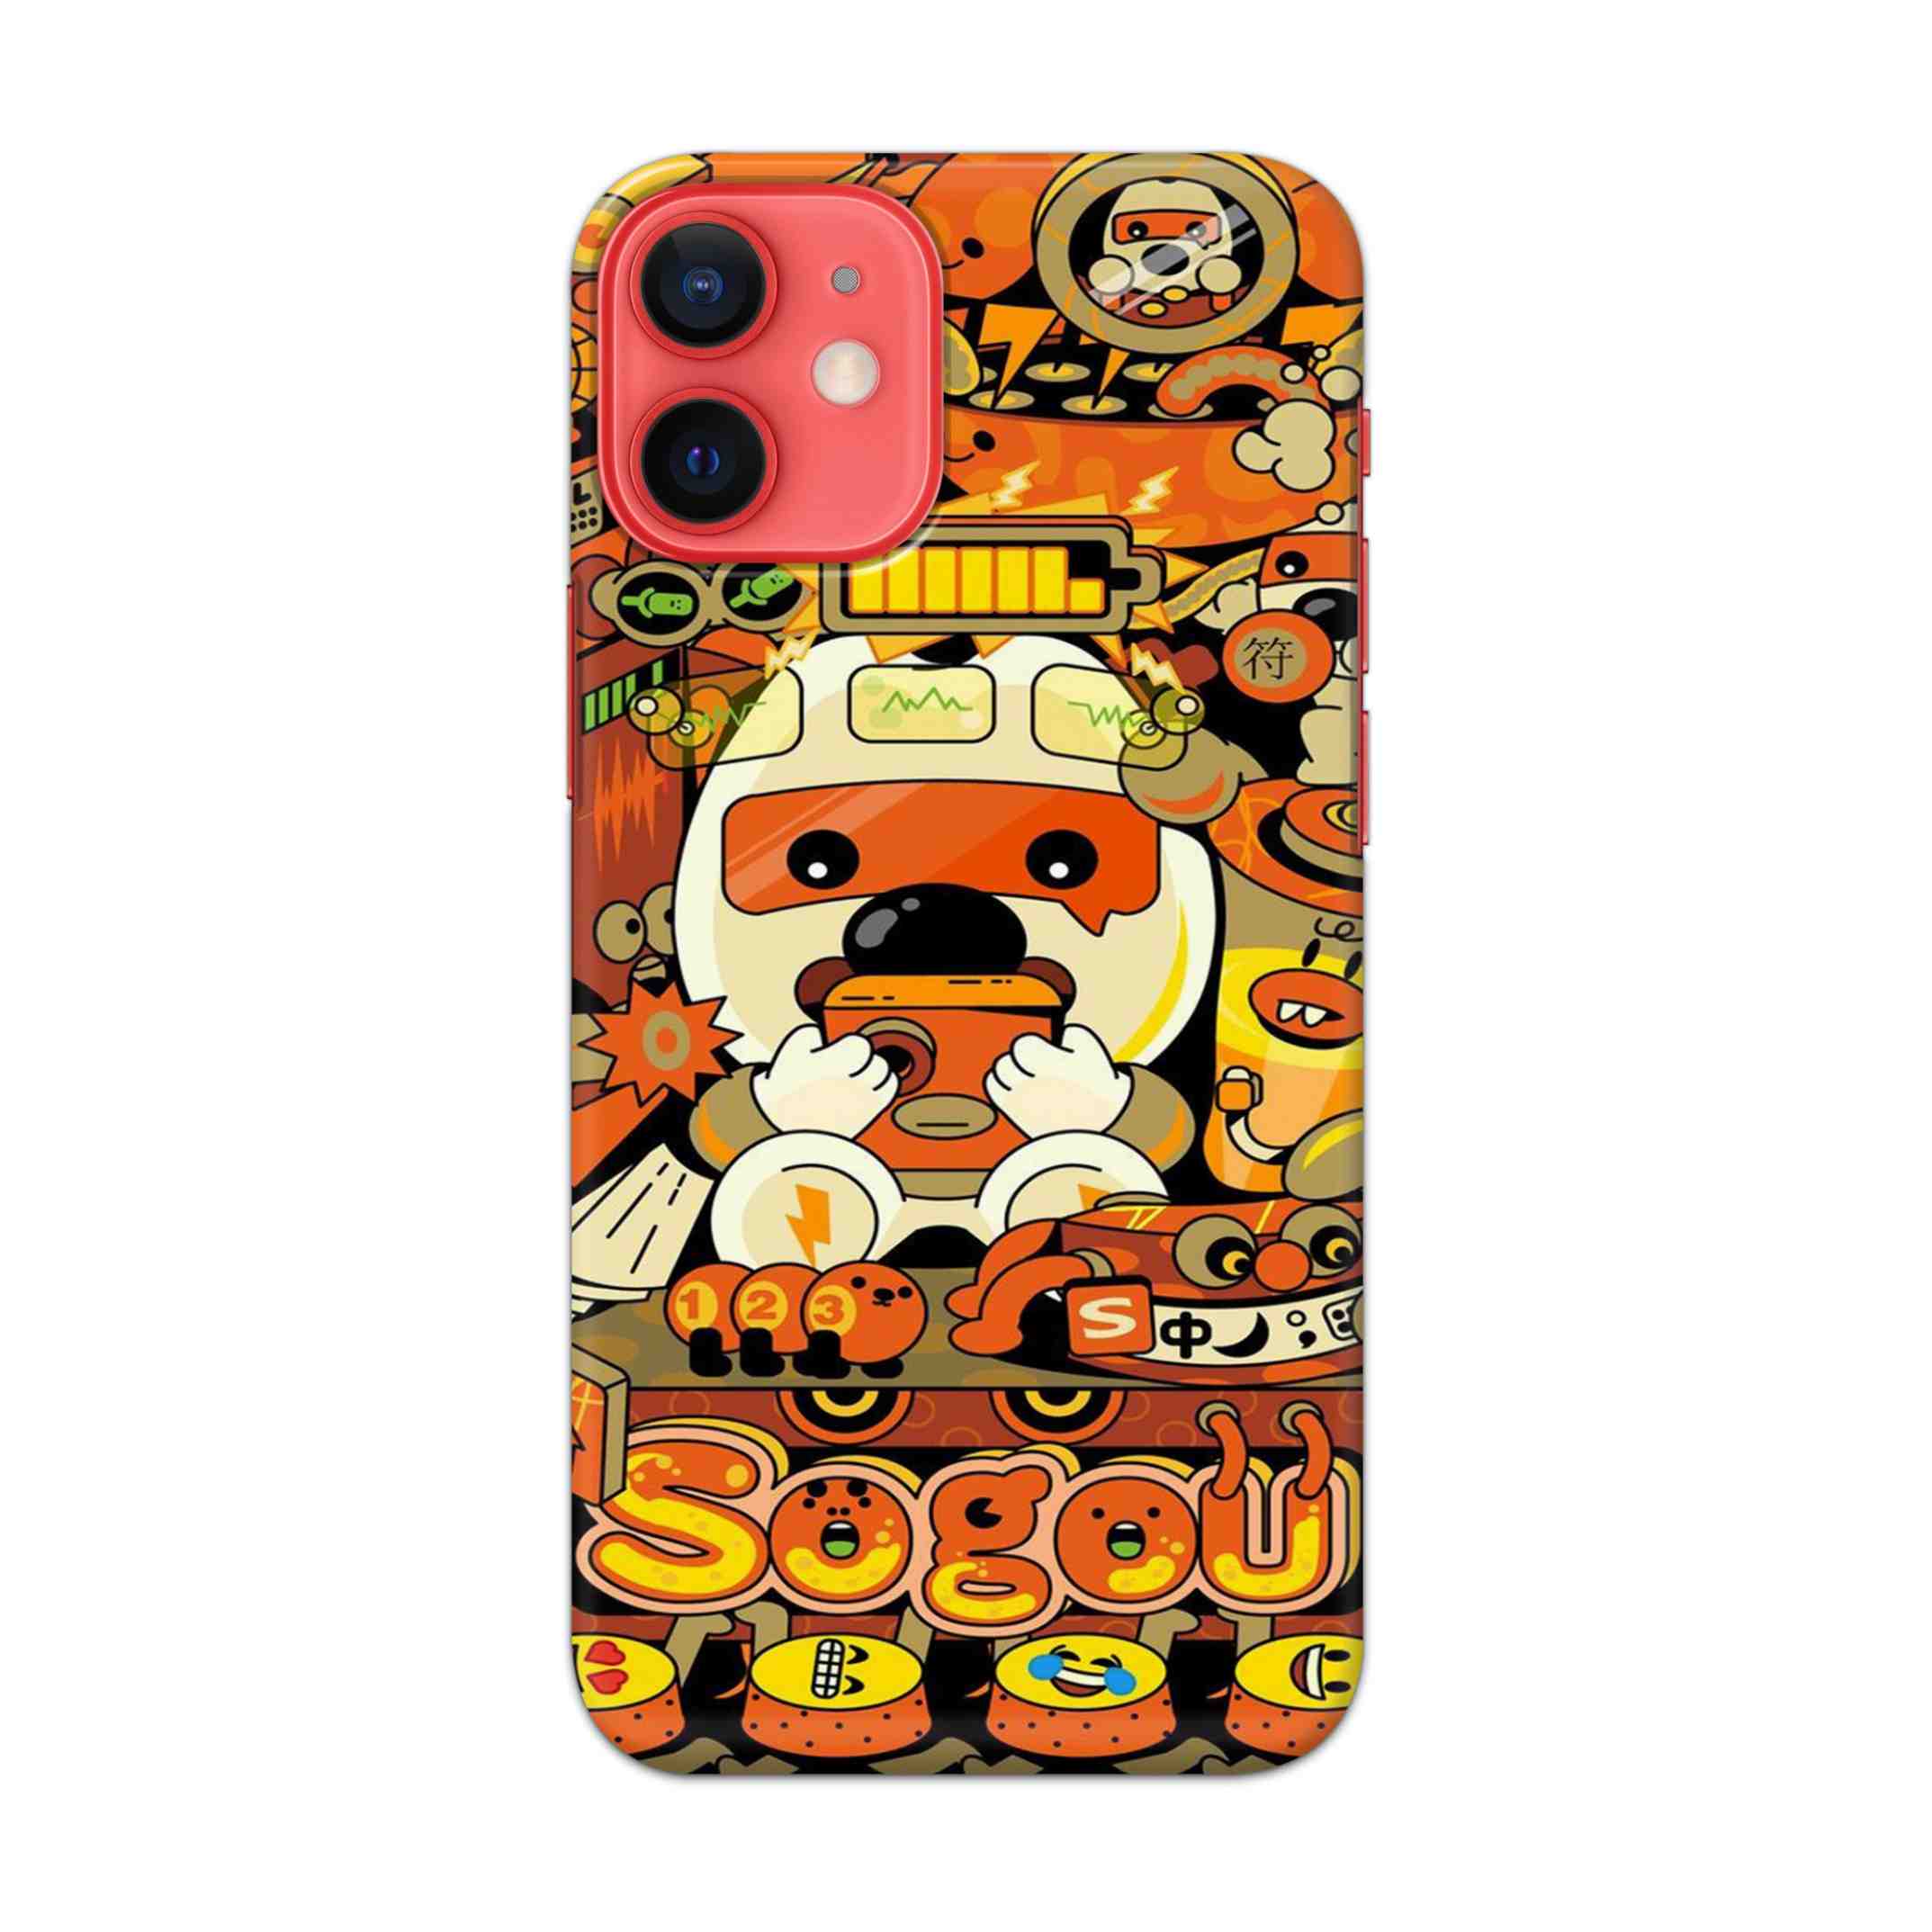 Buy Sogou Hard Back Mobile Phone Case/Cover For Apple iPhone 12 mini Online